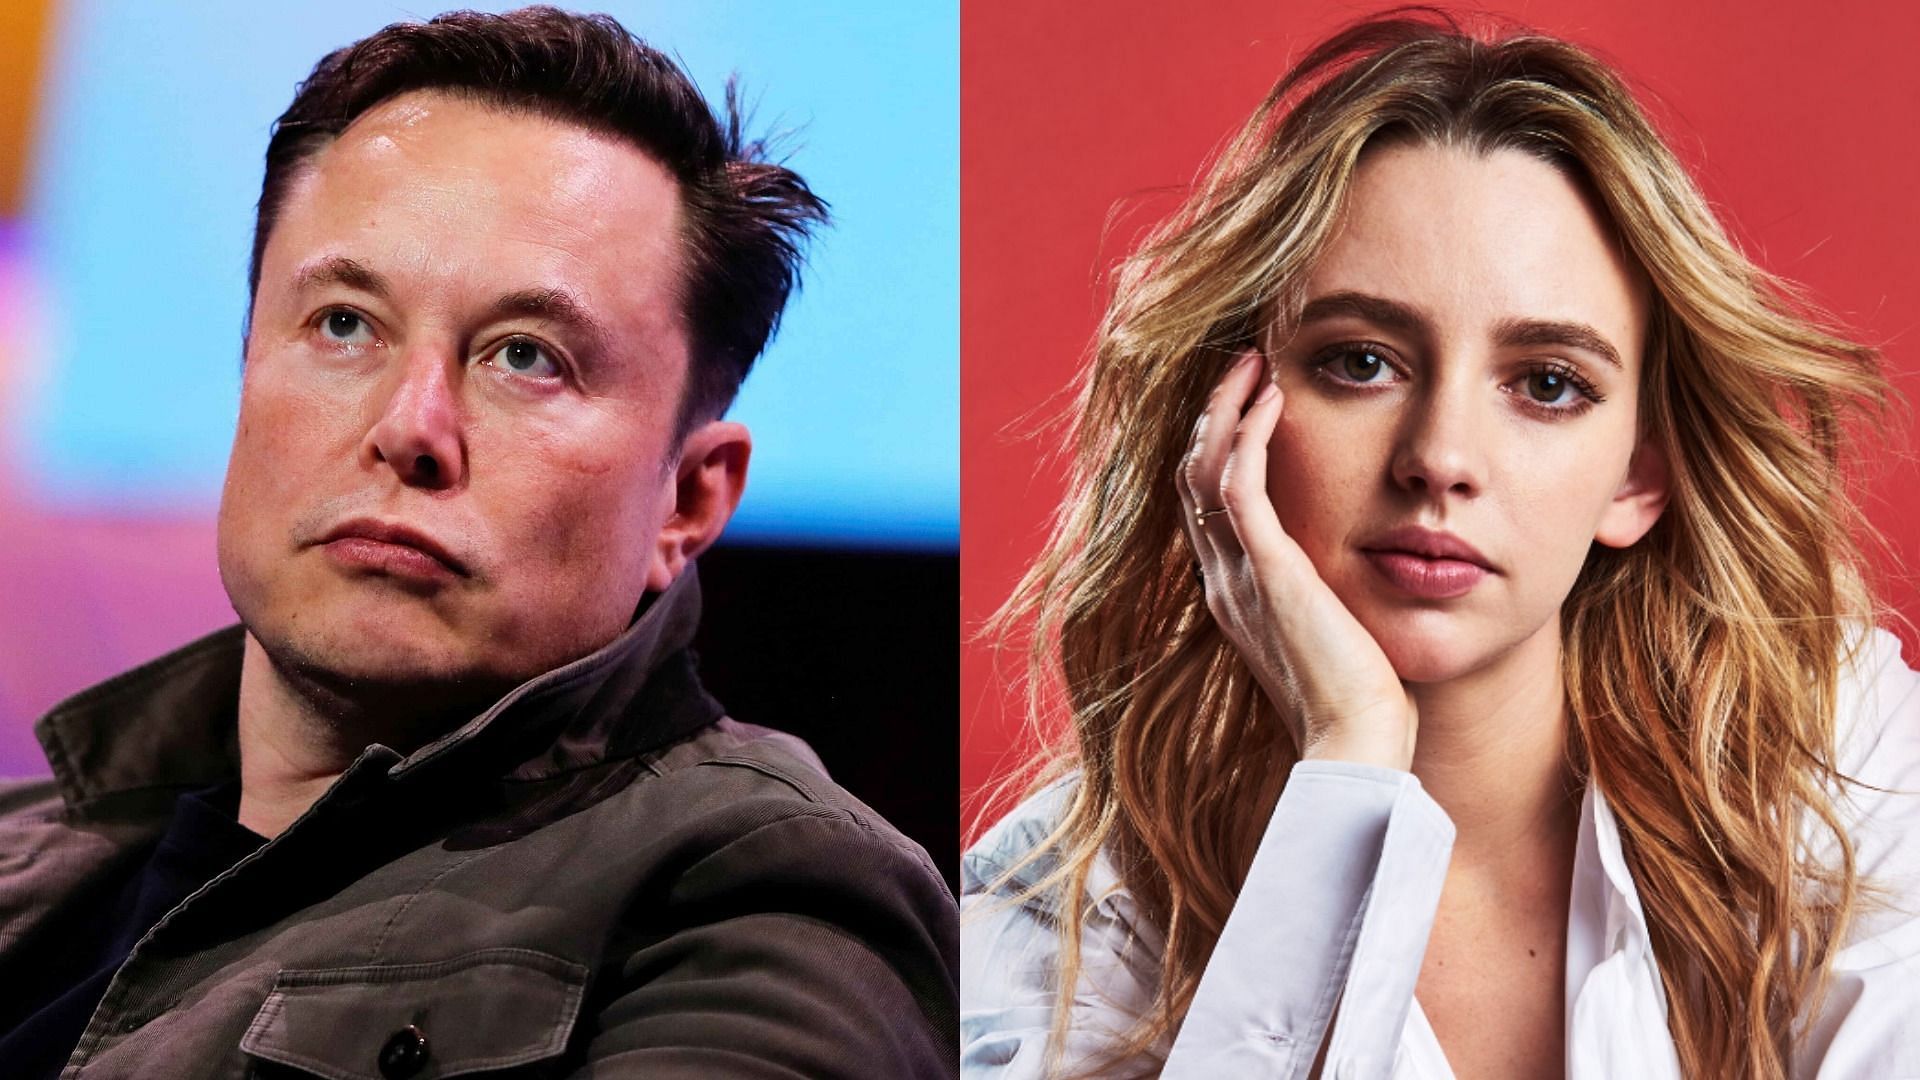 Elon Musk and Natasha Bassett (Images via Mike Blake/Reuters and Michael Buckner/WWD)